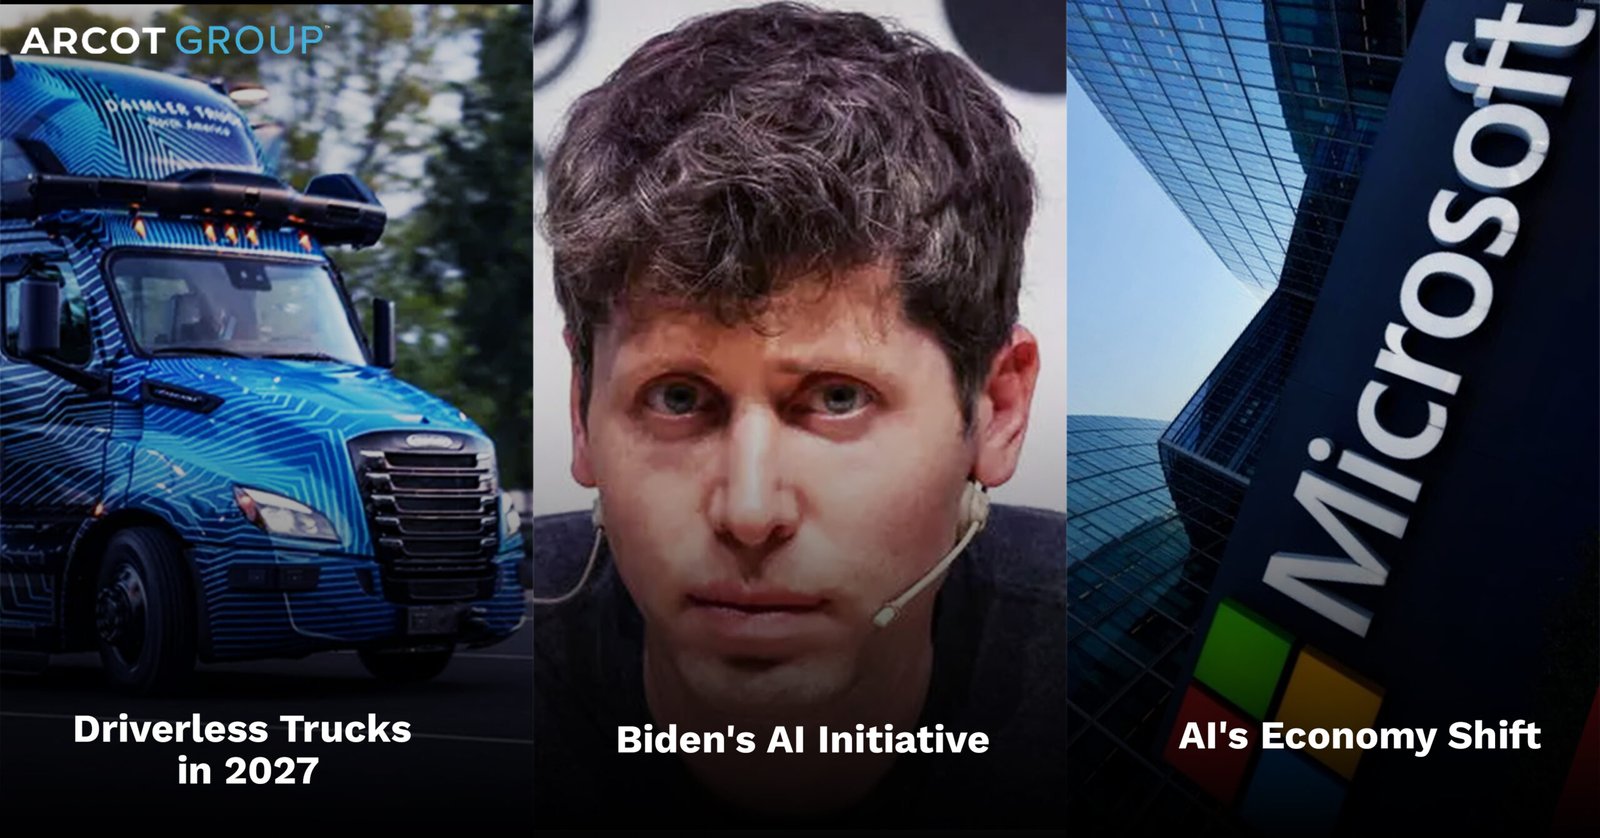 AI’s Economy Shift, Biden’s AI Initiative, and Driverless Trucks in 2027